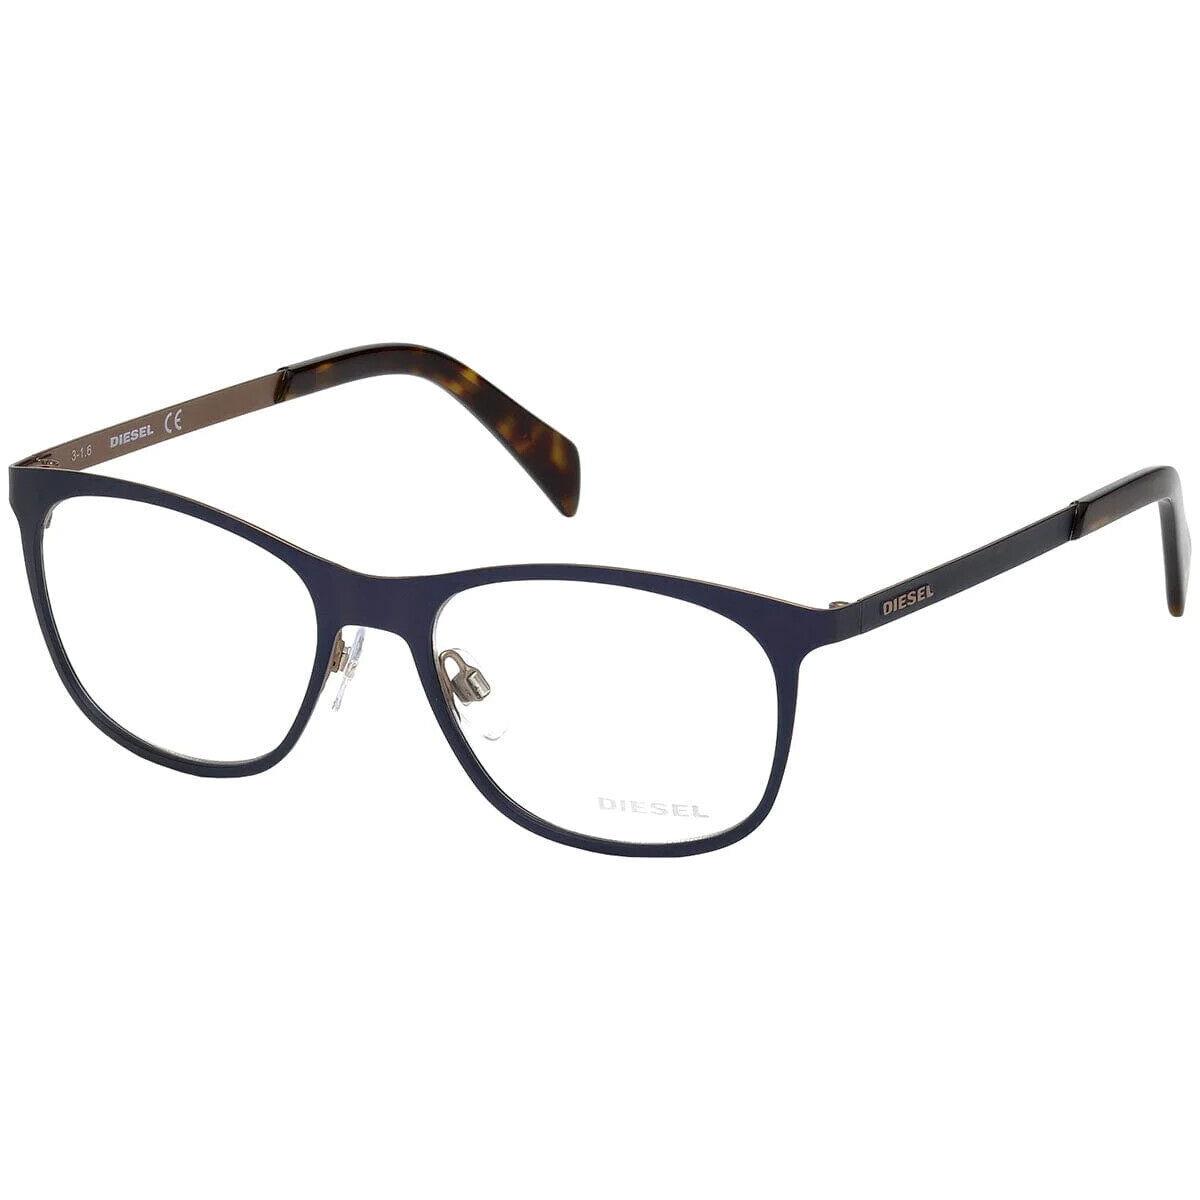 Diesel eyeglasses  - Blue , Blue Frame, Clear Lens 0